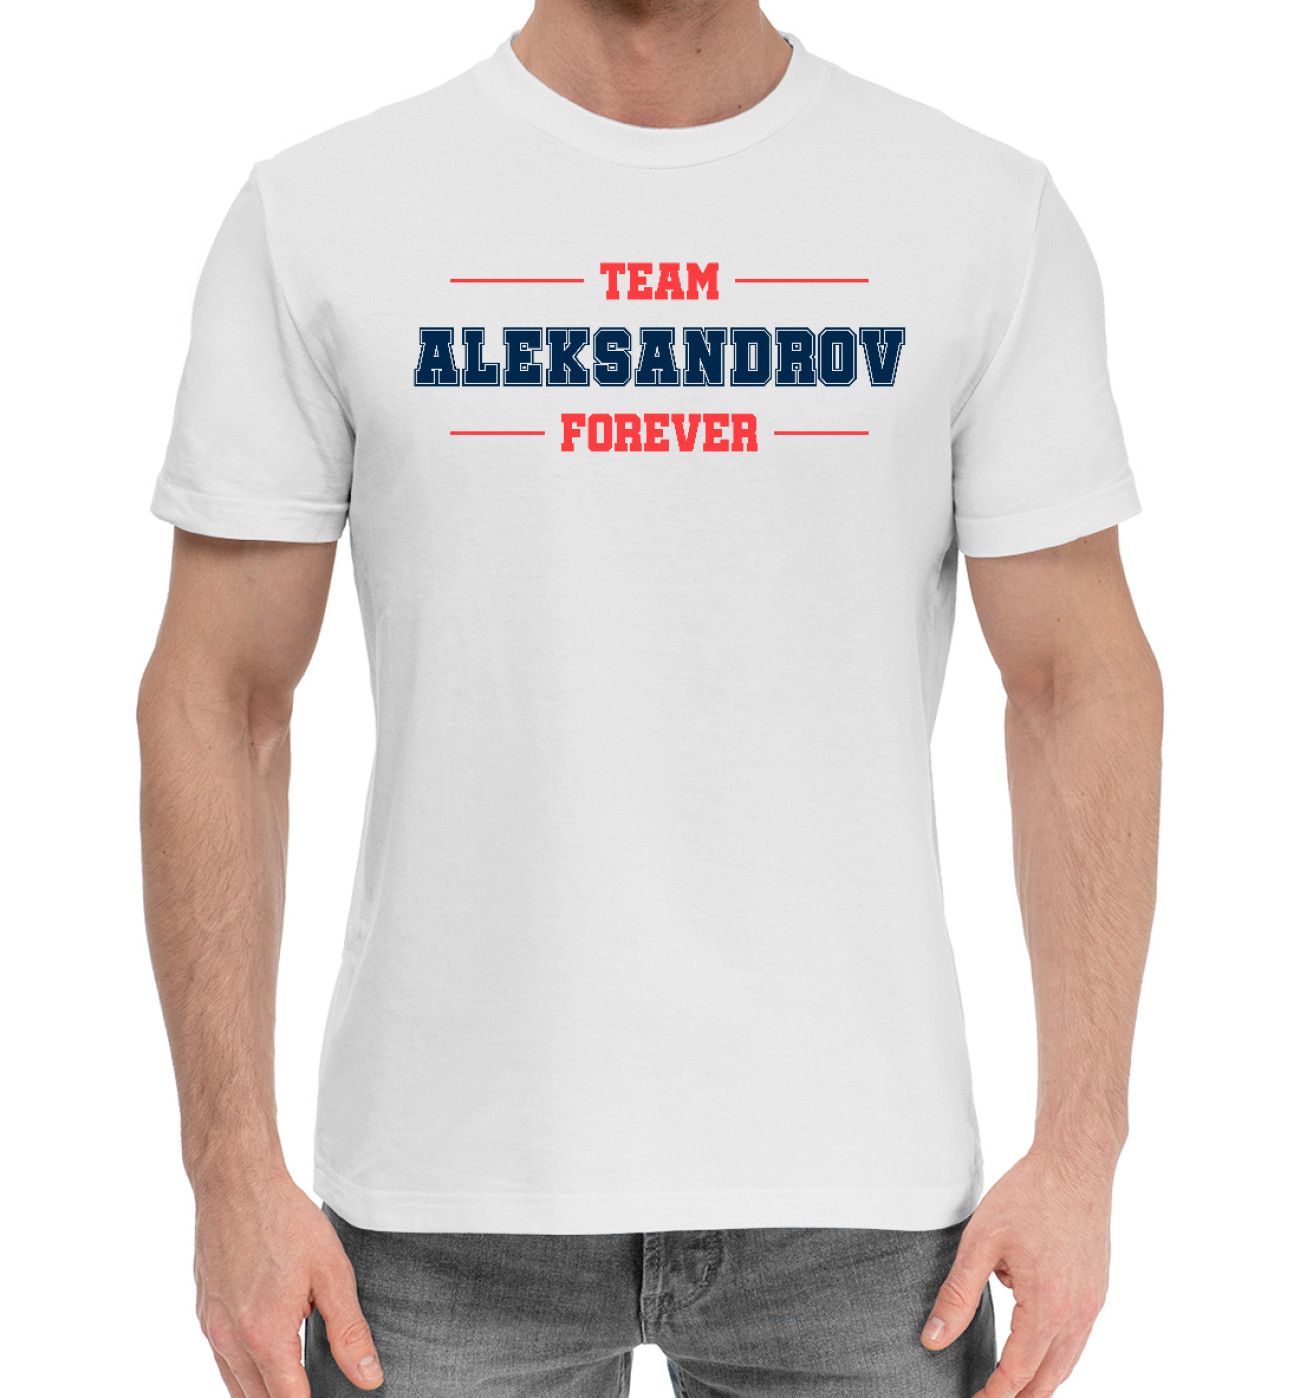 Мужская Хлопковая футболка Team Aleksandrov, артикул: AXV-695661-hfu-2